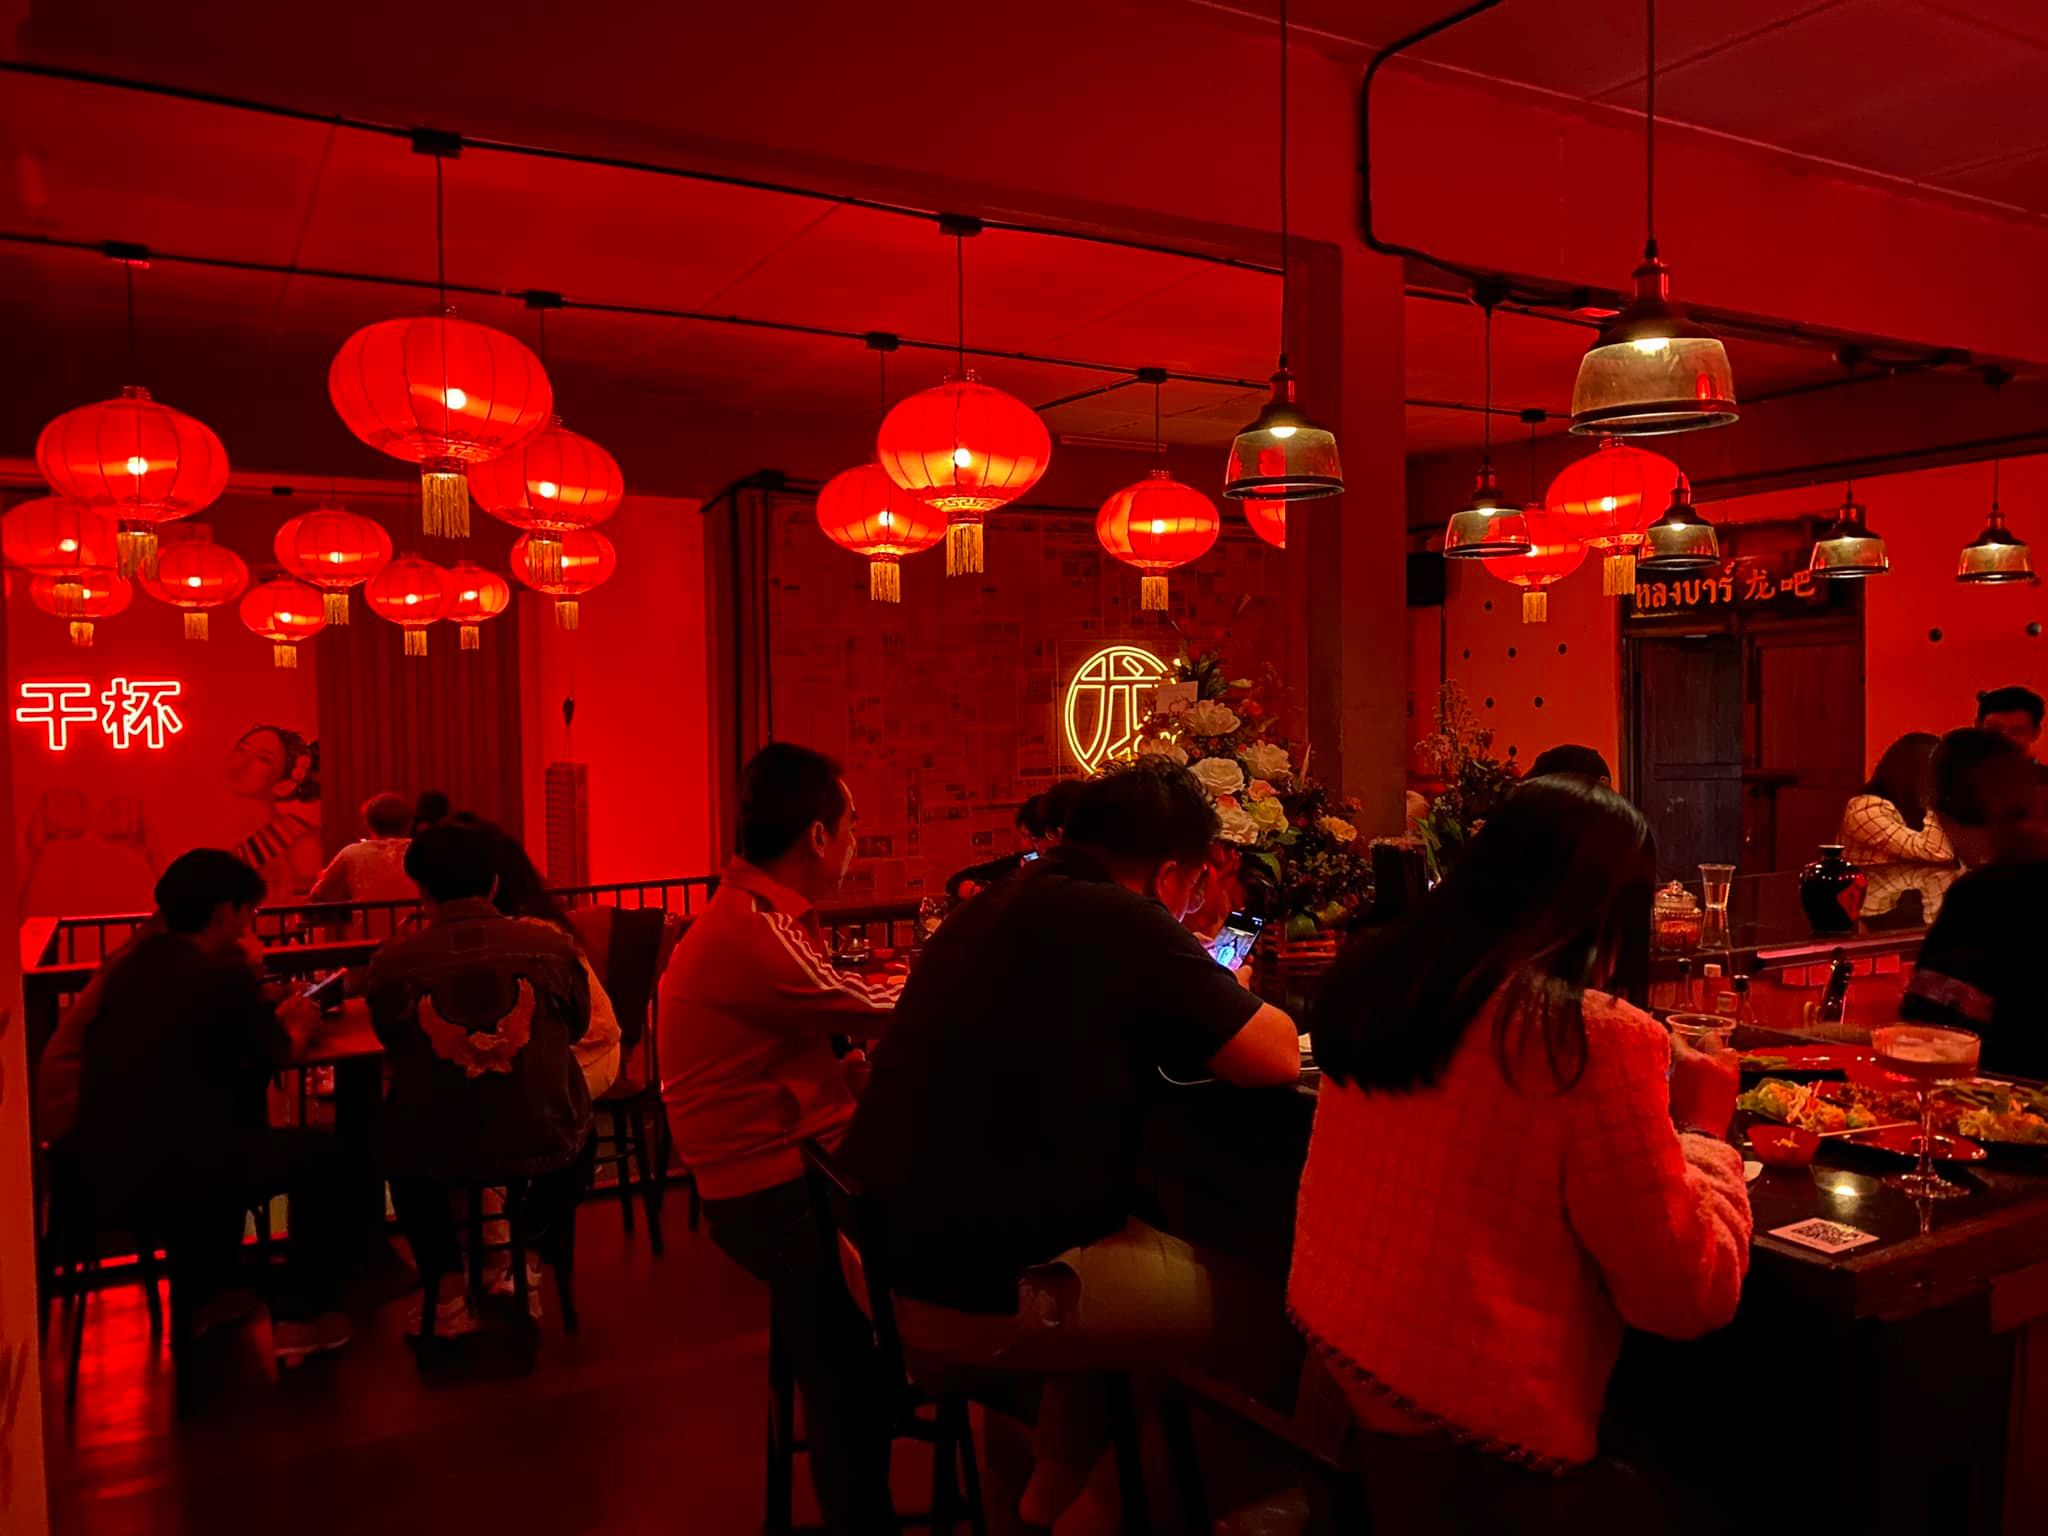 Lóng ba Chinese experience Bar (หลงบาร์) : Khon Kaen (ขอนแก่น)